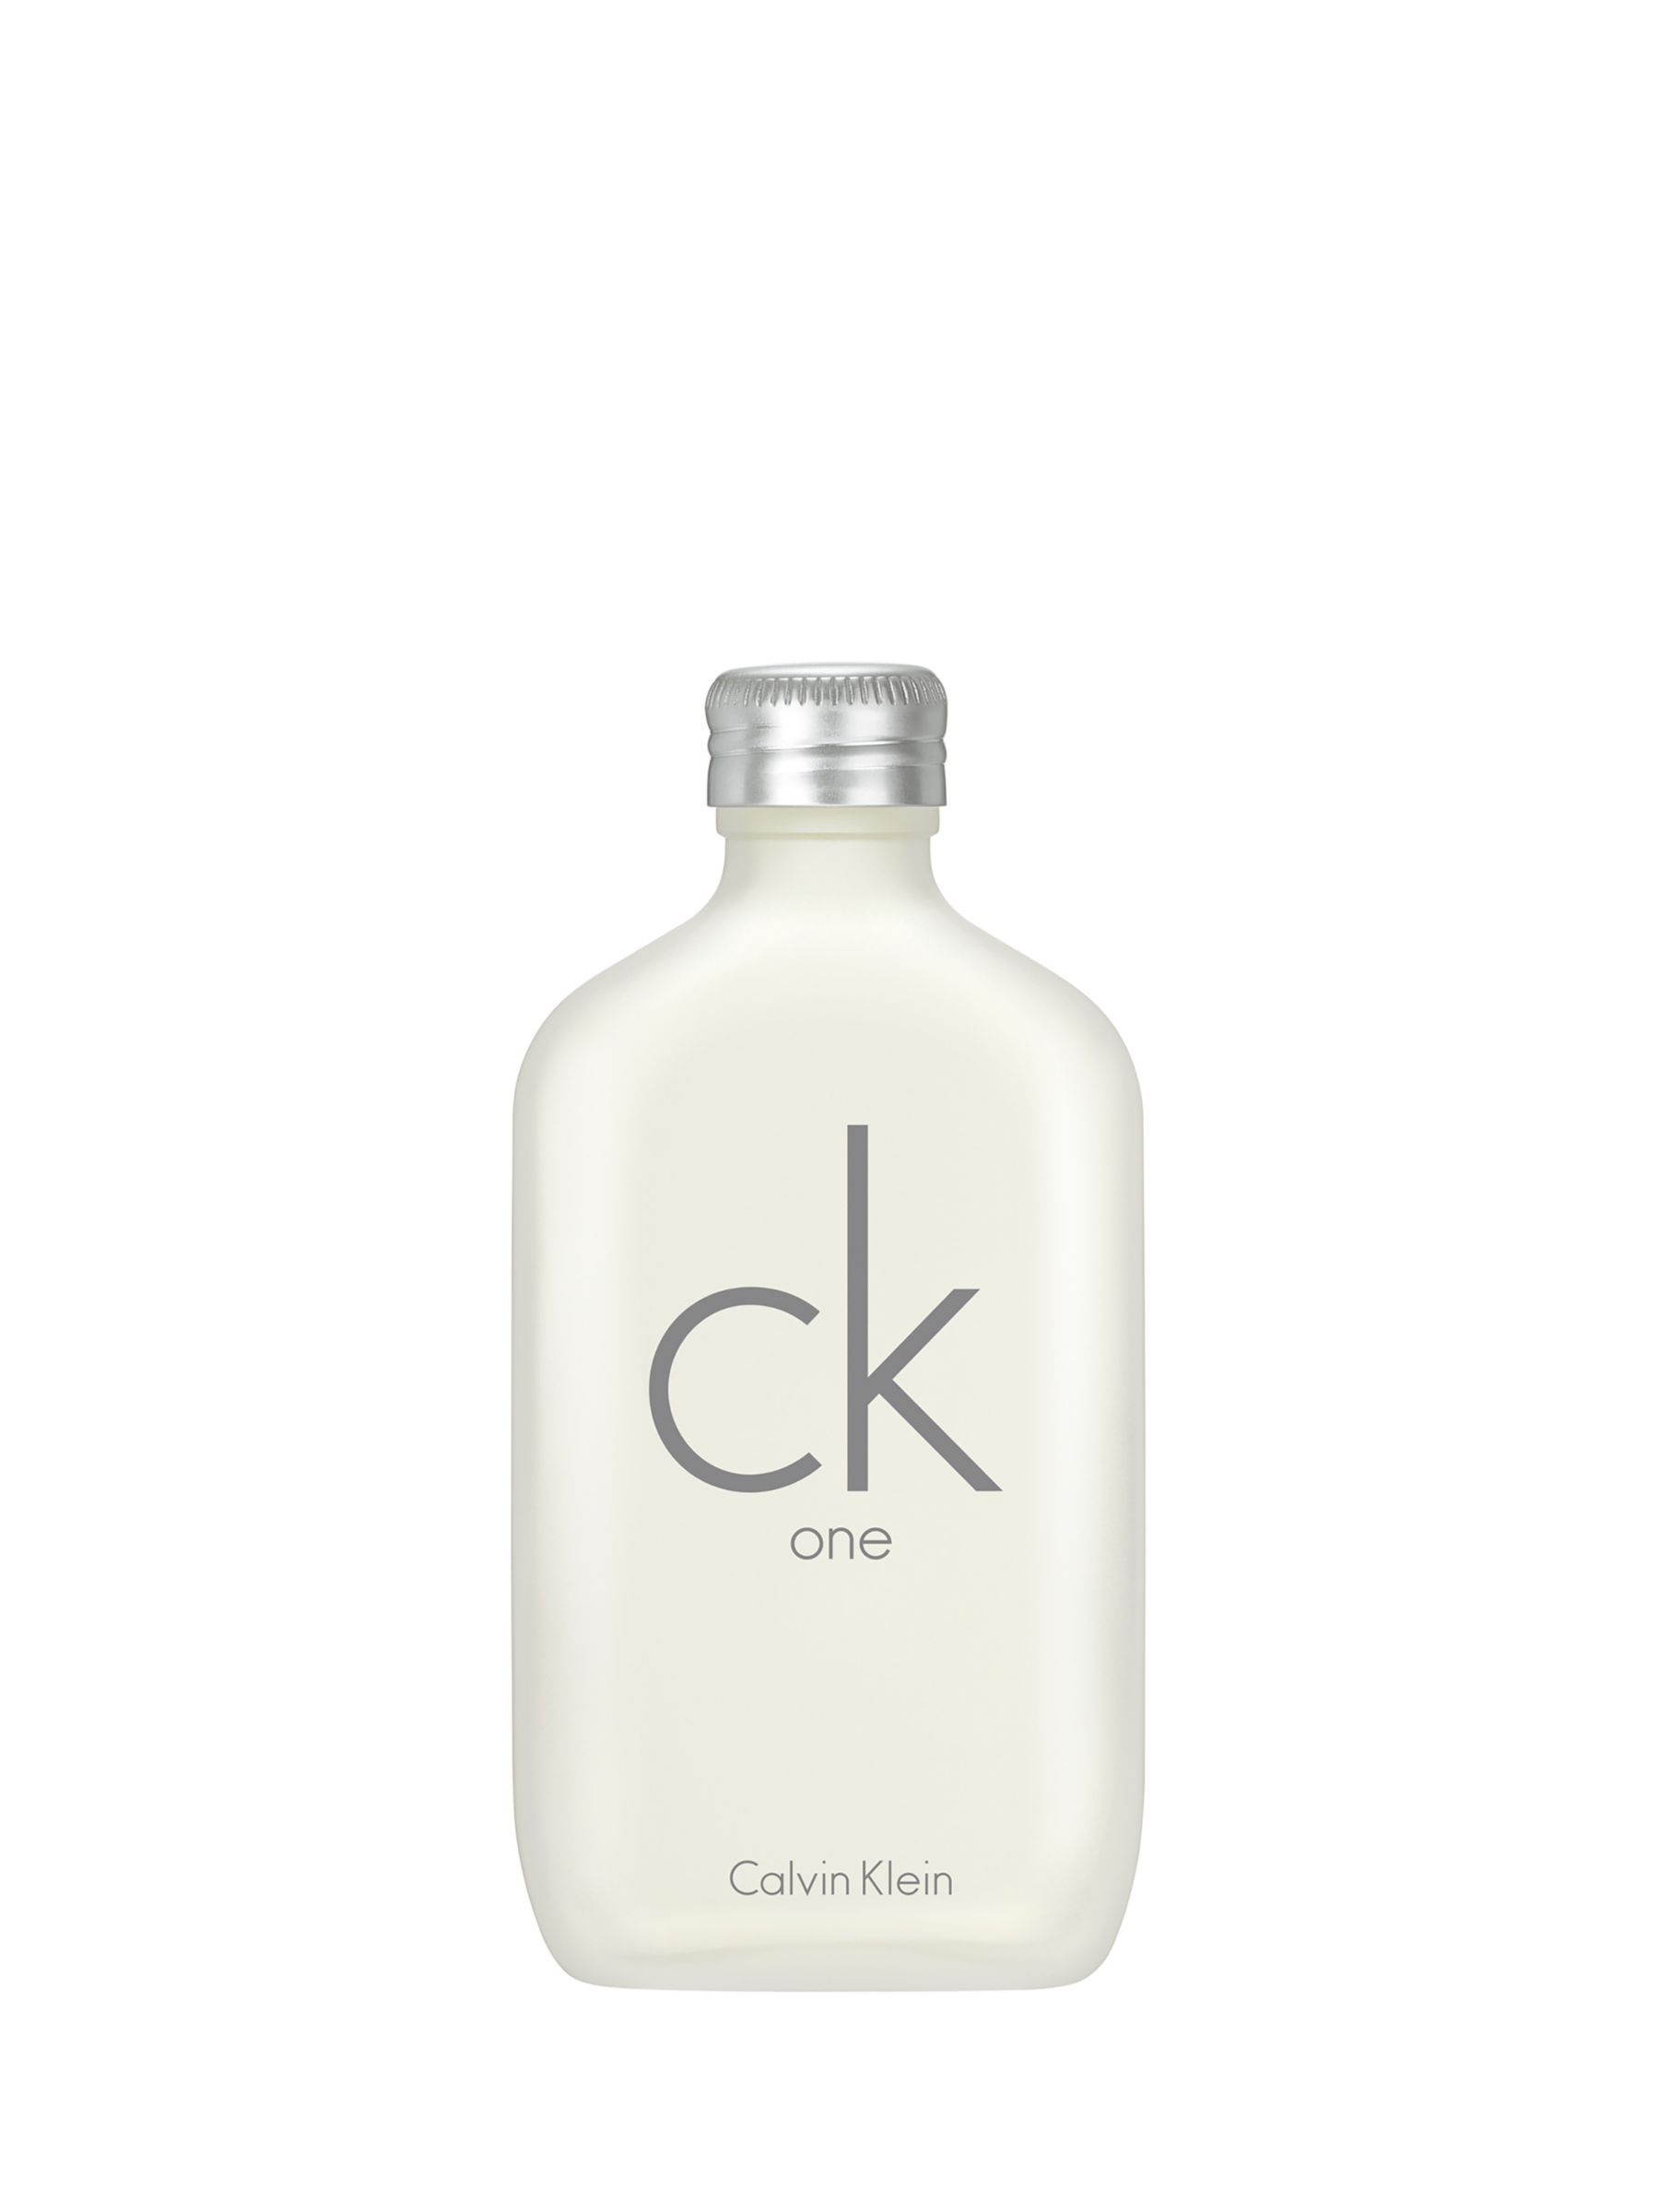 Calvin Klein CK ONE Eau de Toilette, 100ml 1